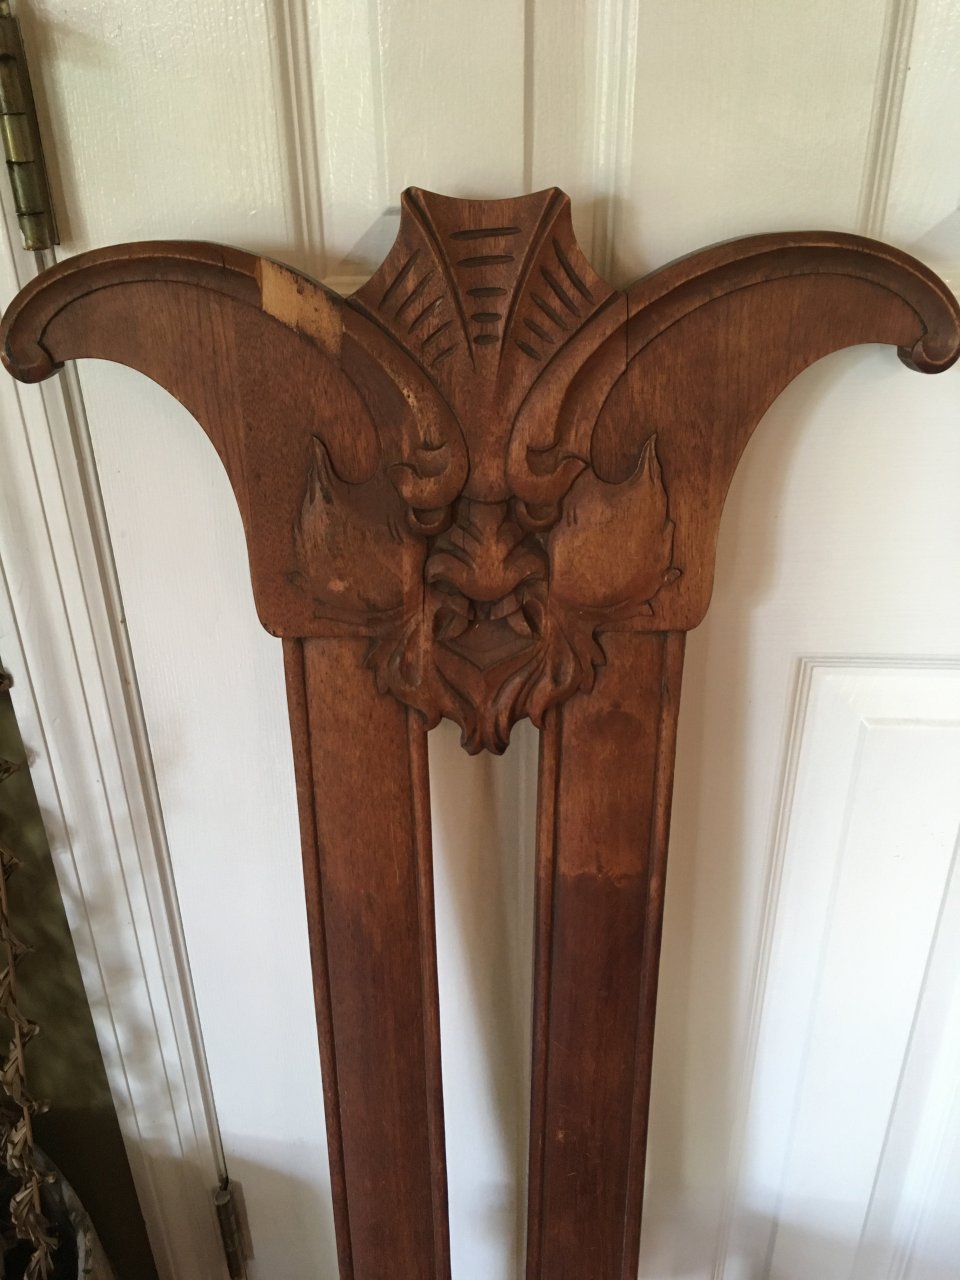 Antique Gargoyle Face Chair | My Antique Furniture Collection